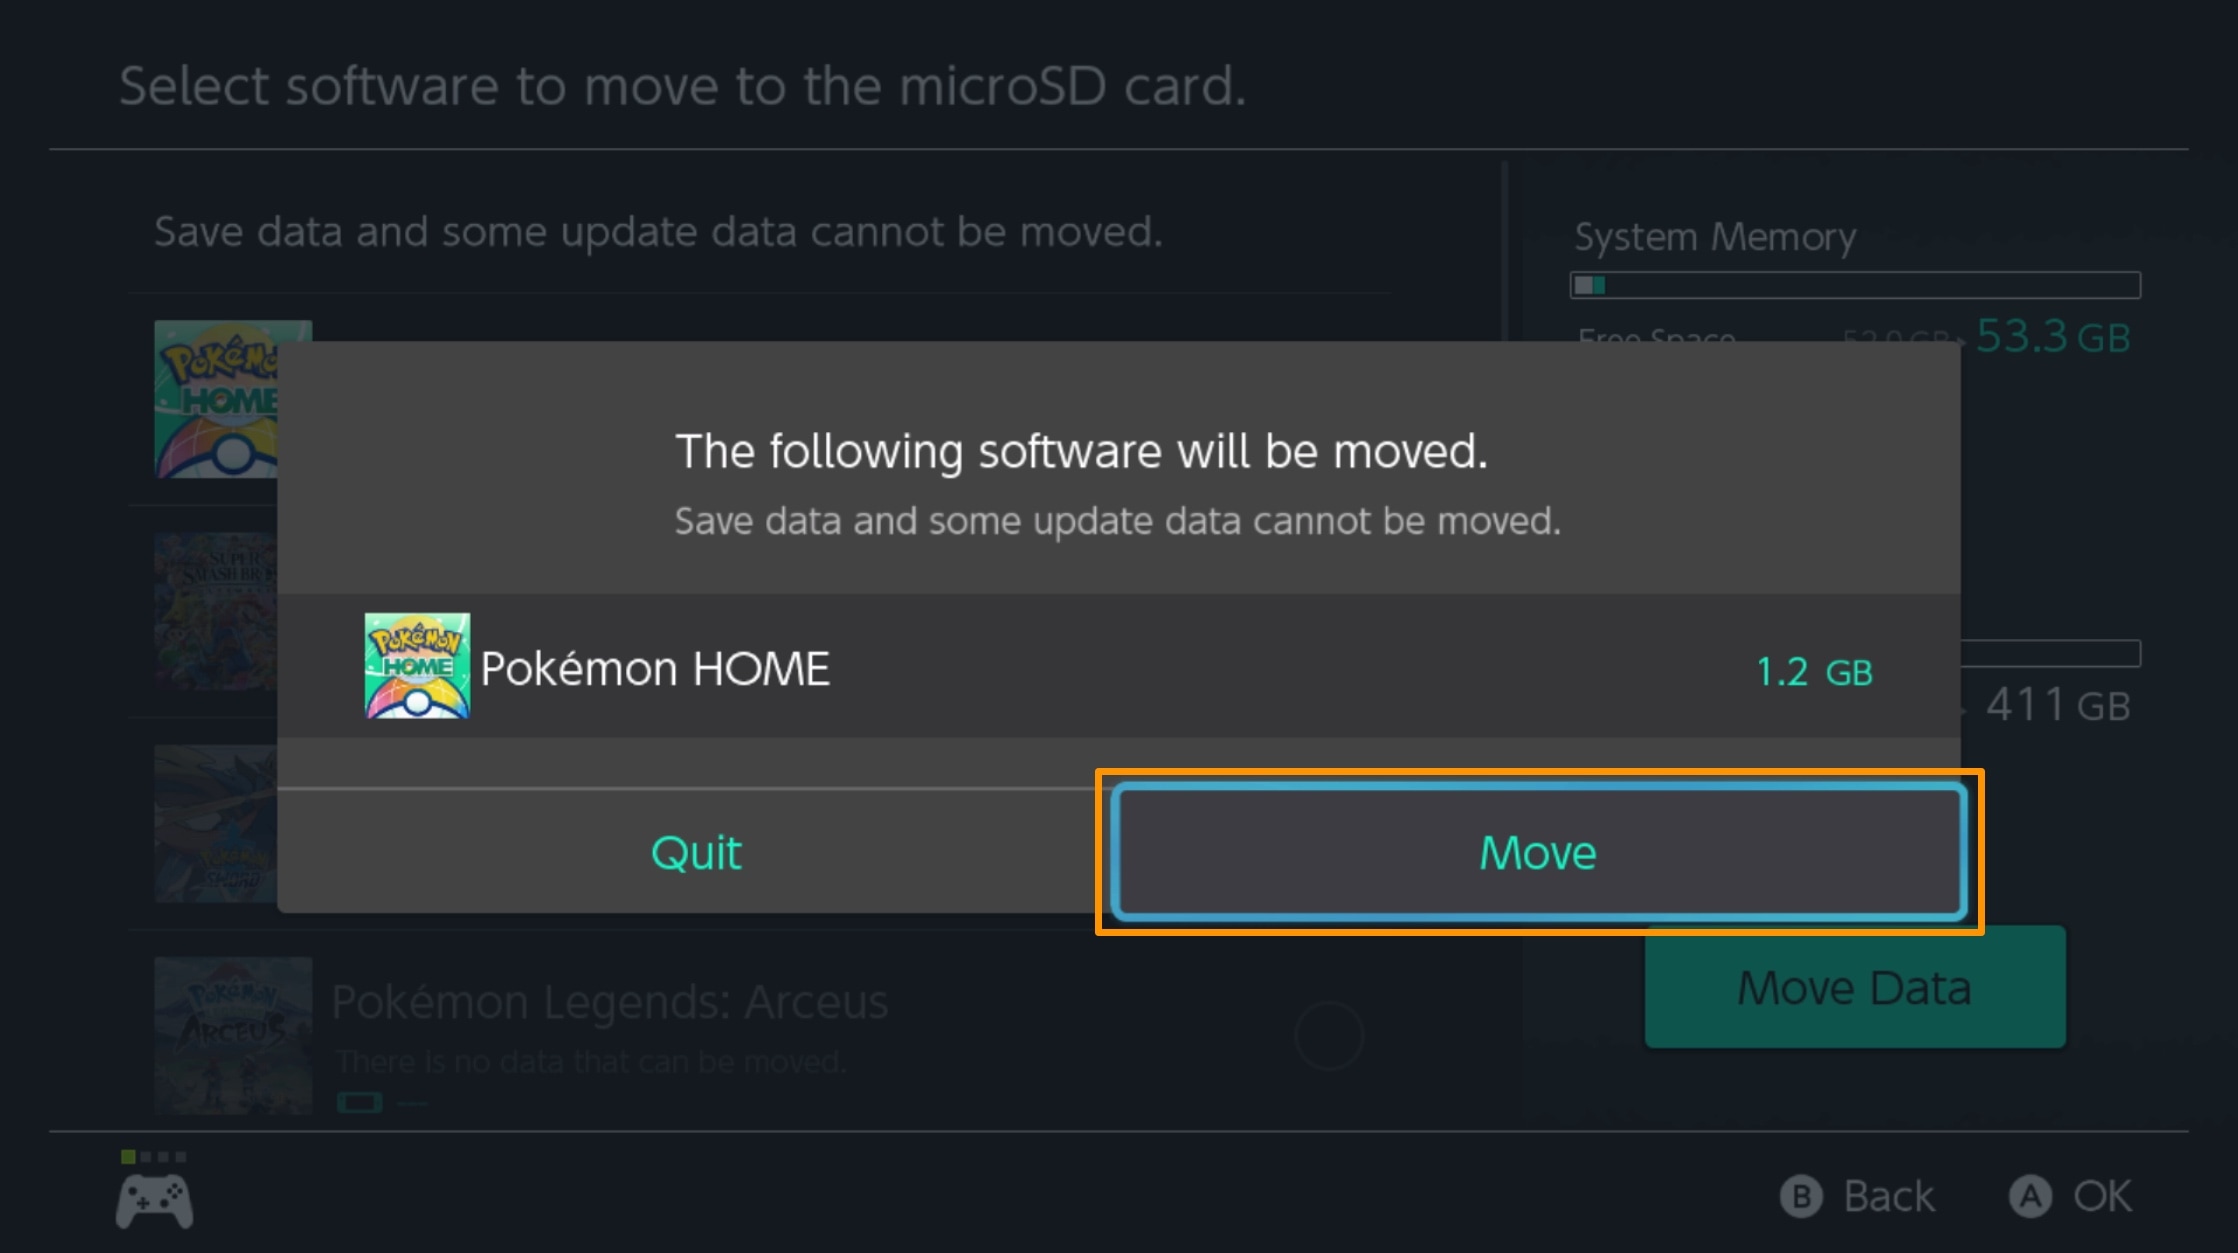 Nintendo Switch microSD move confirmation message.